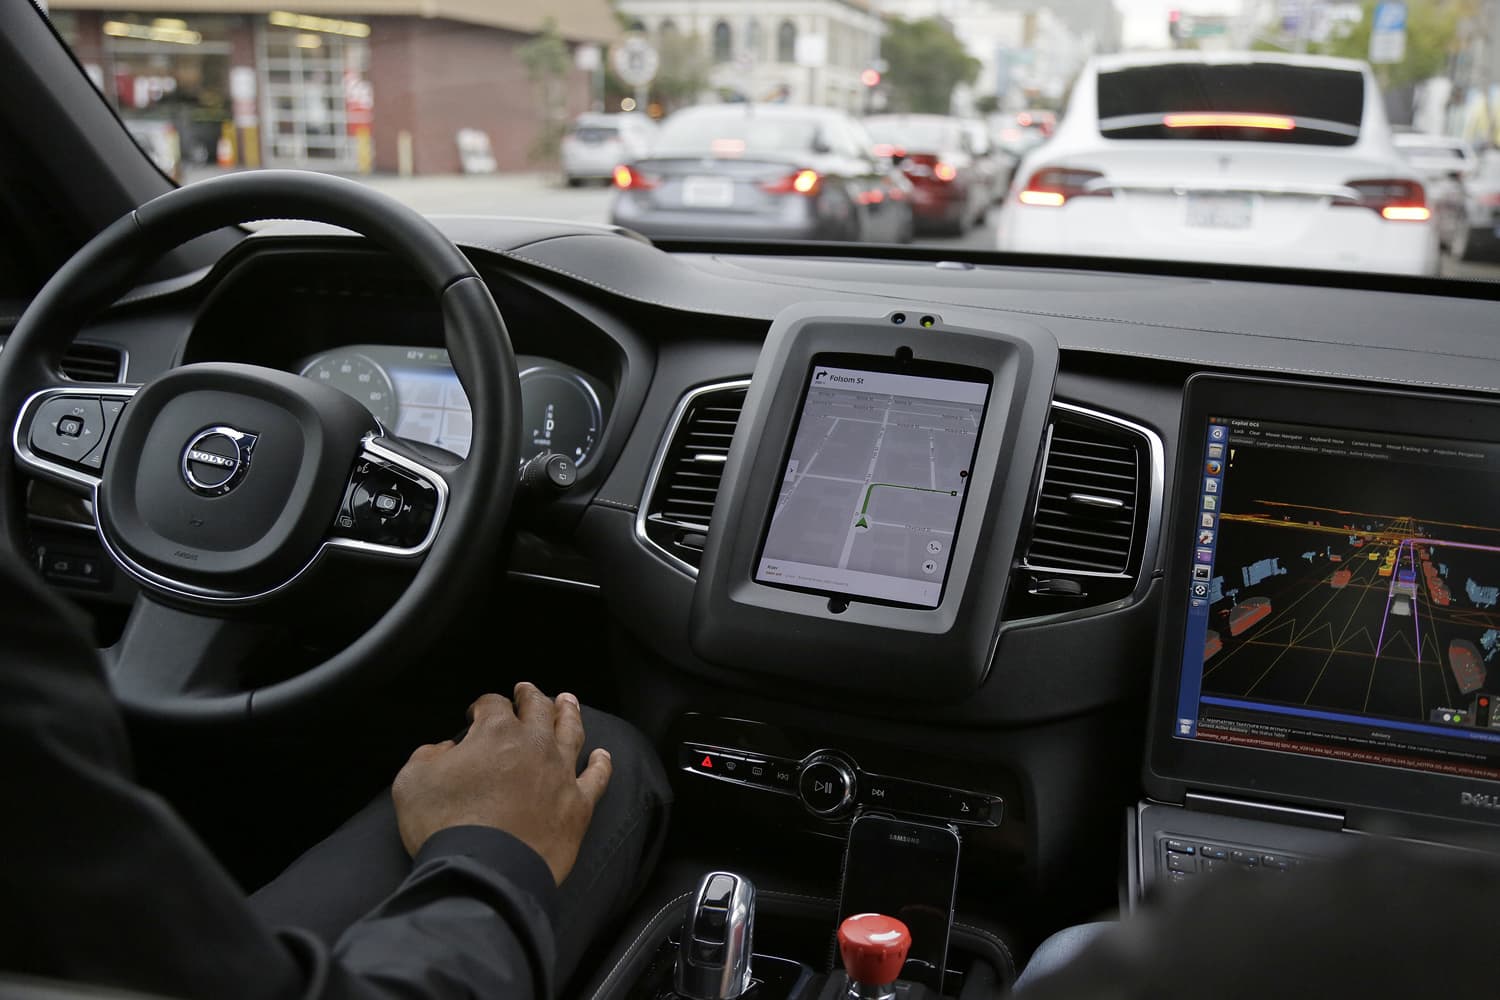 An Uber driverless car waits in traffic during a test drive in San Francisco. (Eric Risberg/AP)